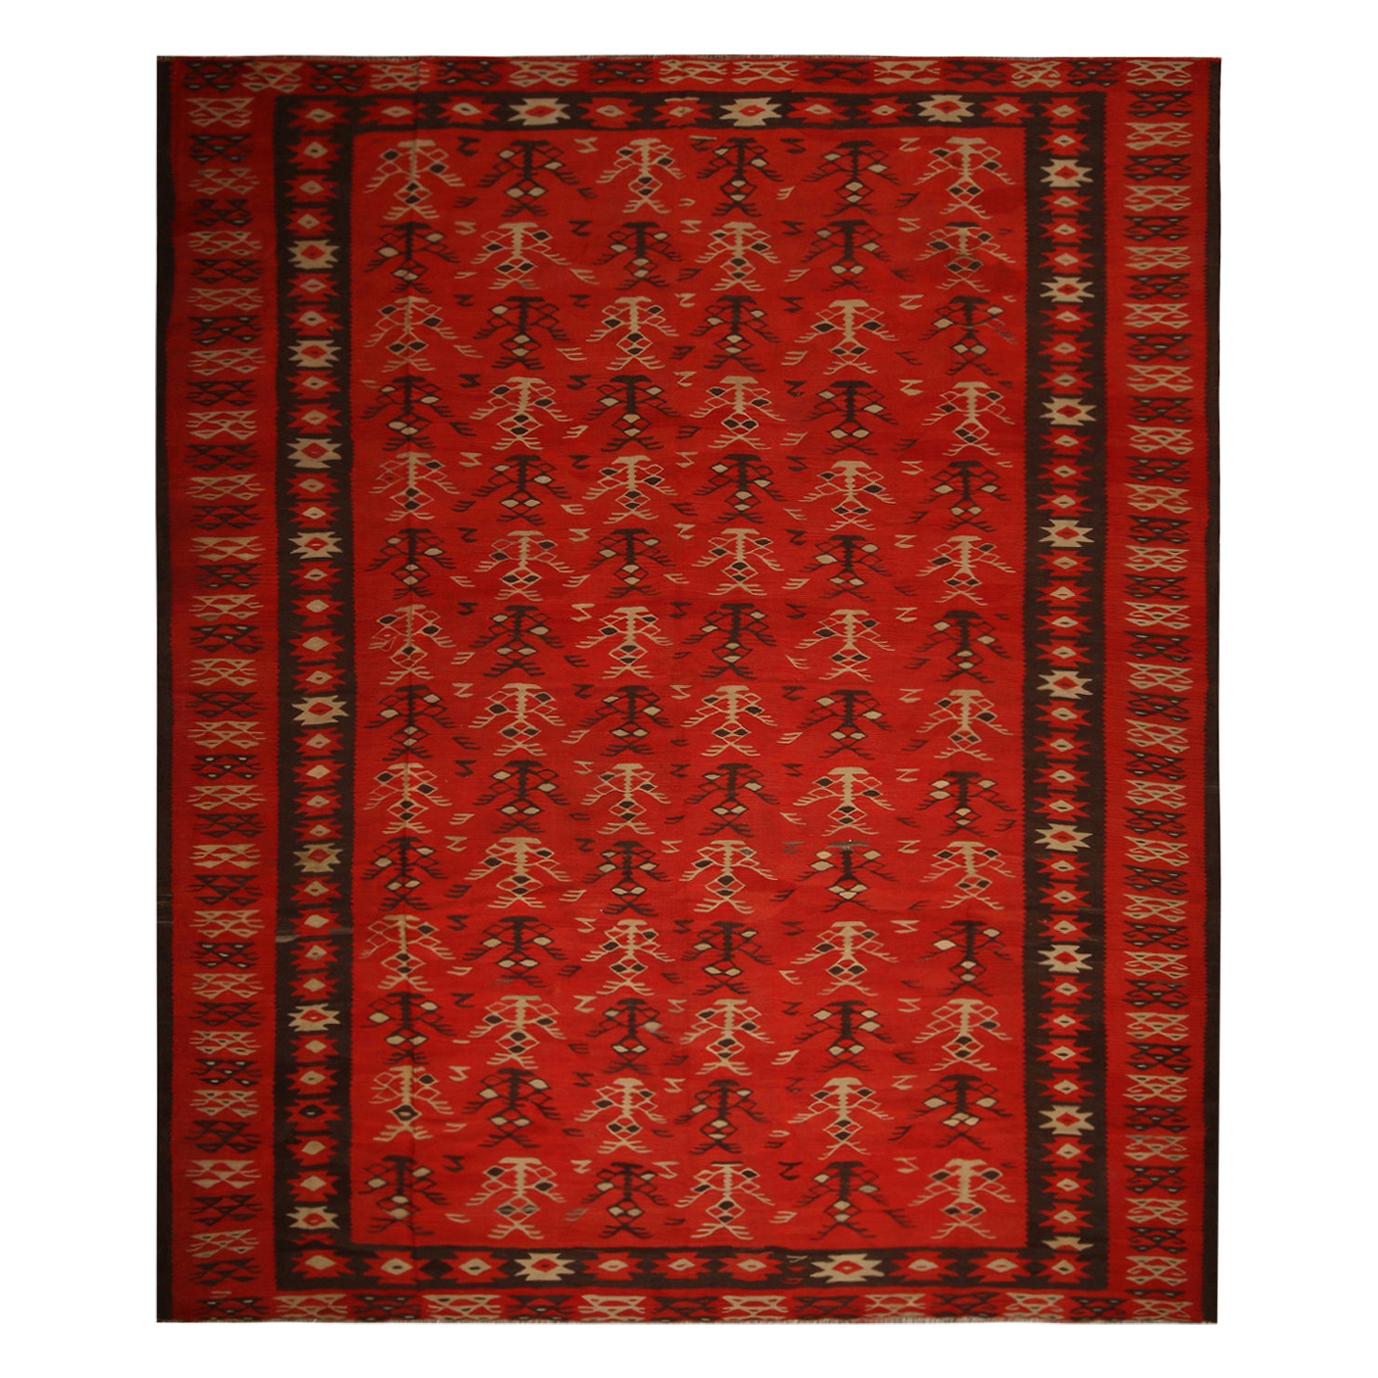 Handwoven Vintage Tribal Kilim in Red Brown Geometric Patterns by Rug & Kilim For Sale